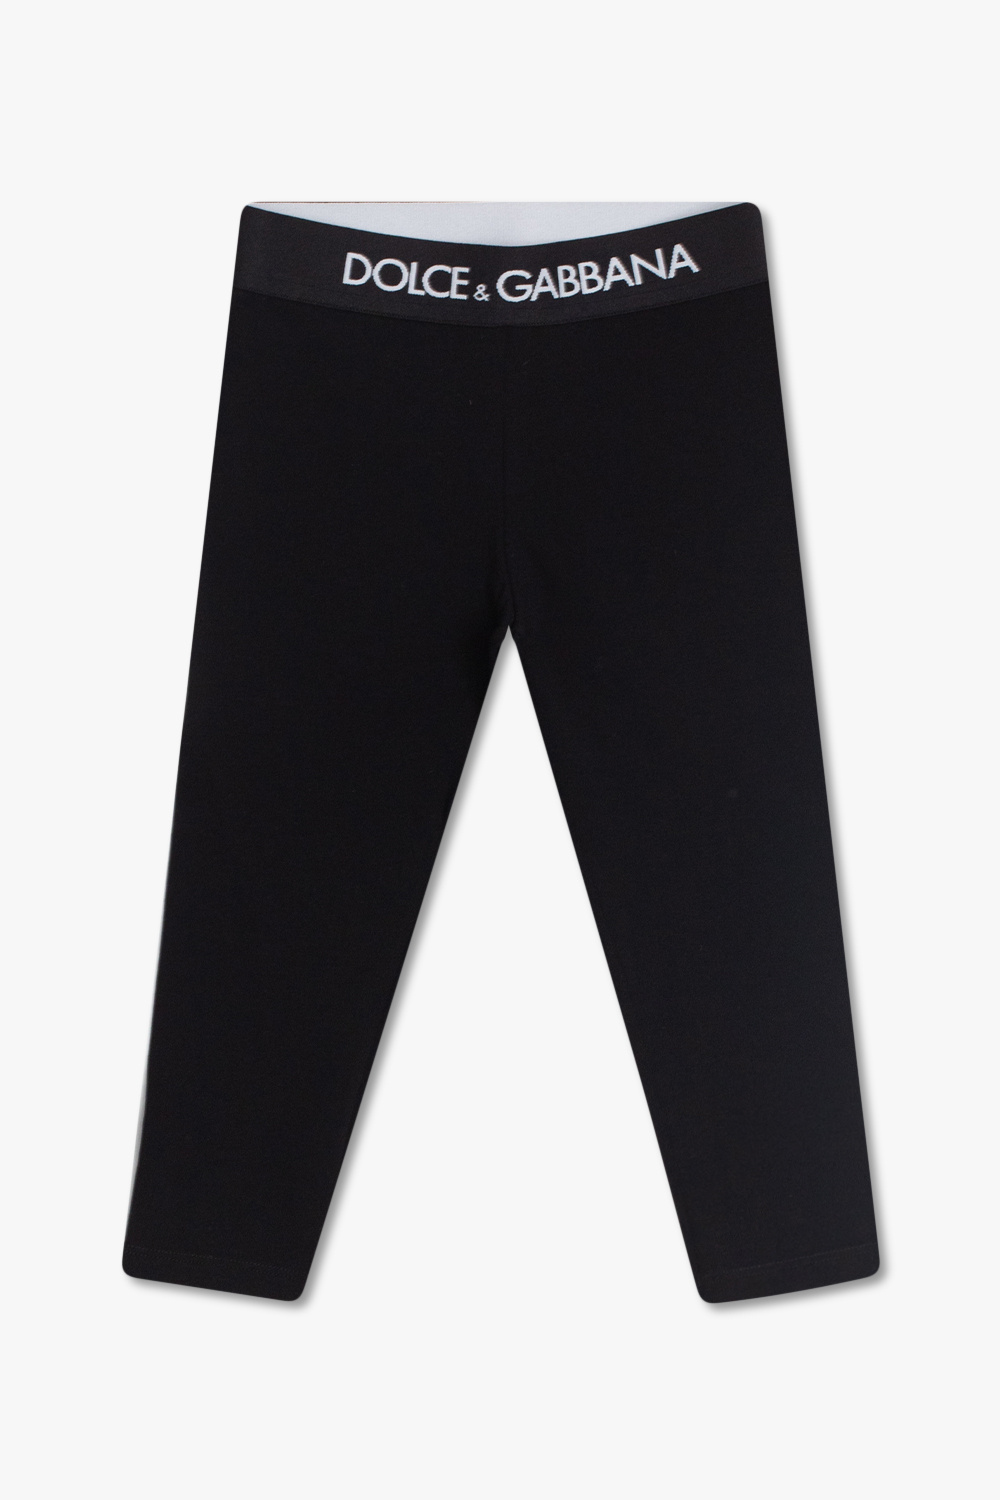 Dolce & Gabbana Kids Cotton leggings